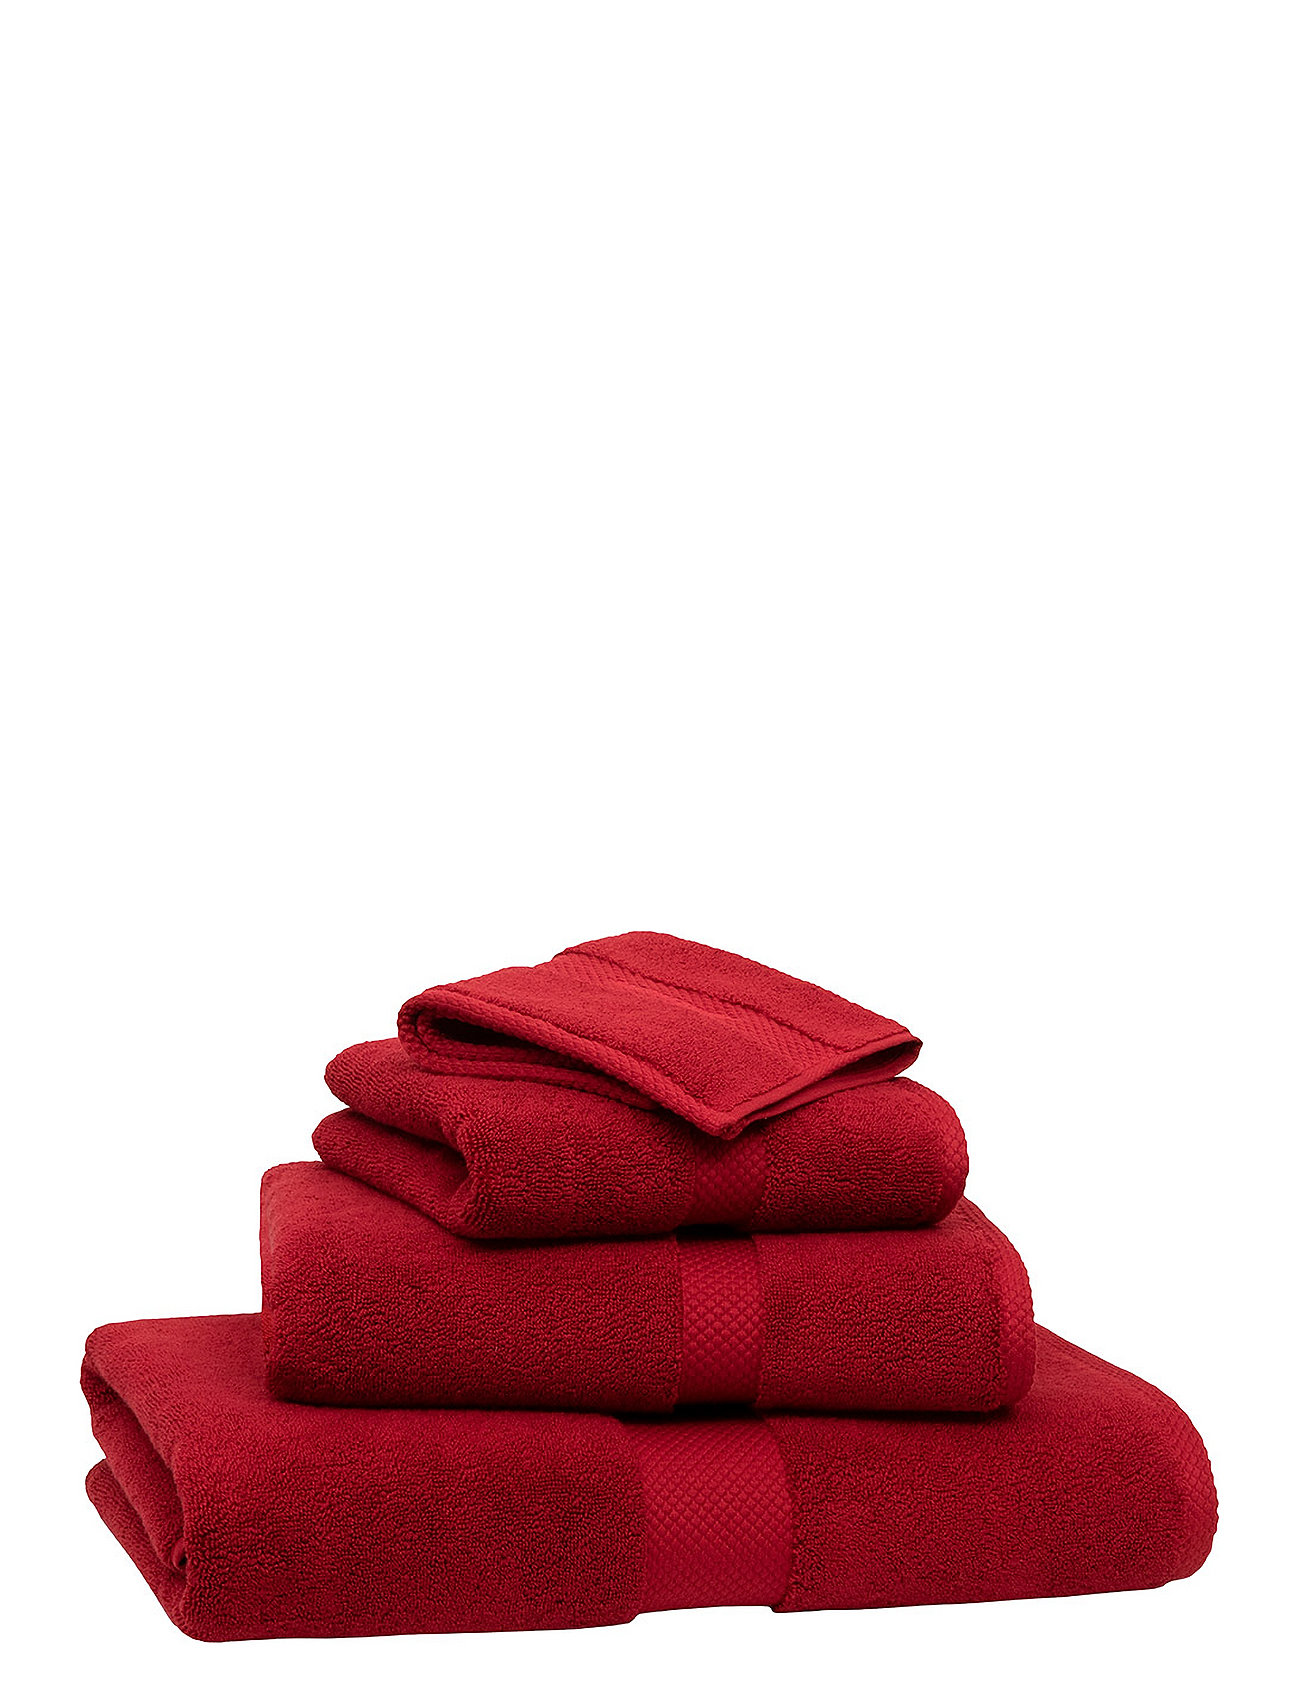 Avenue Wash Towel Home Textiles Bathroom Textiles Towels & Bath Towels Face Towels Red Ralph Lauren Home